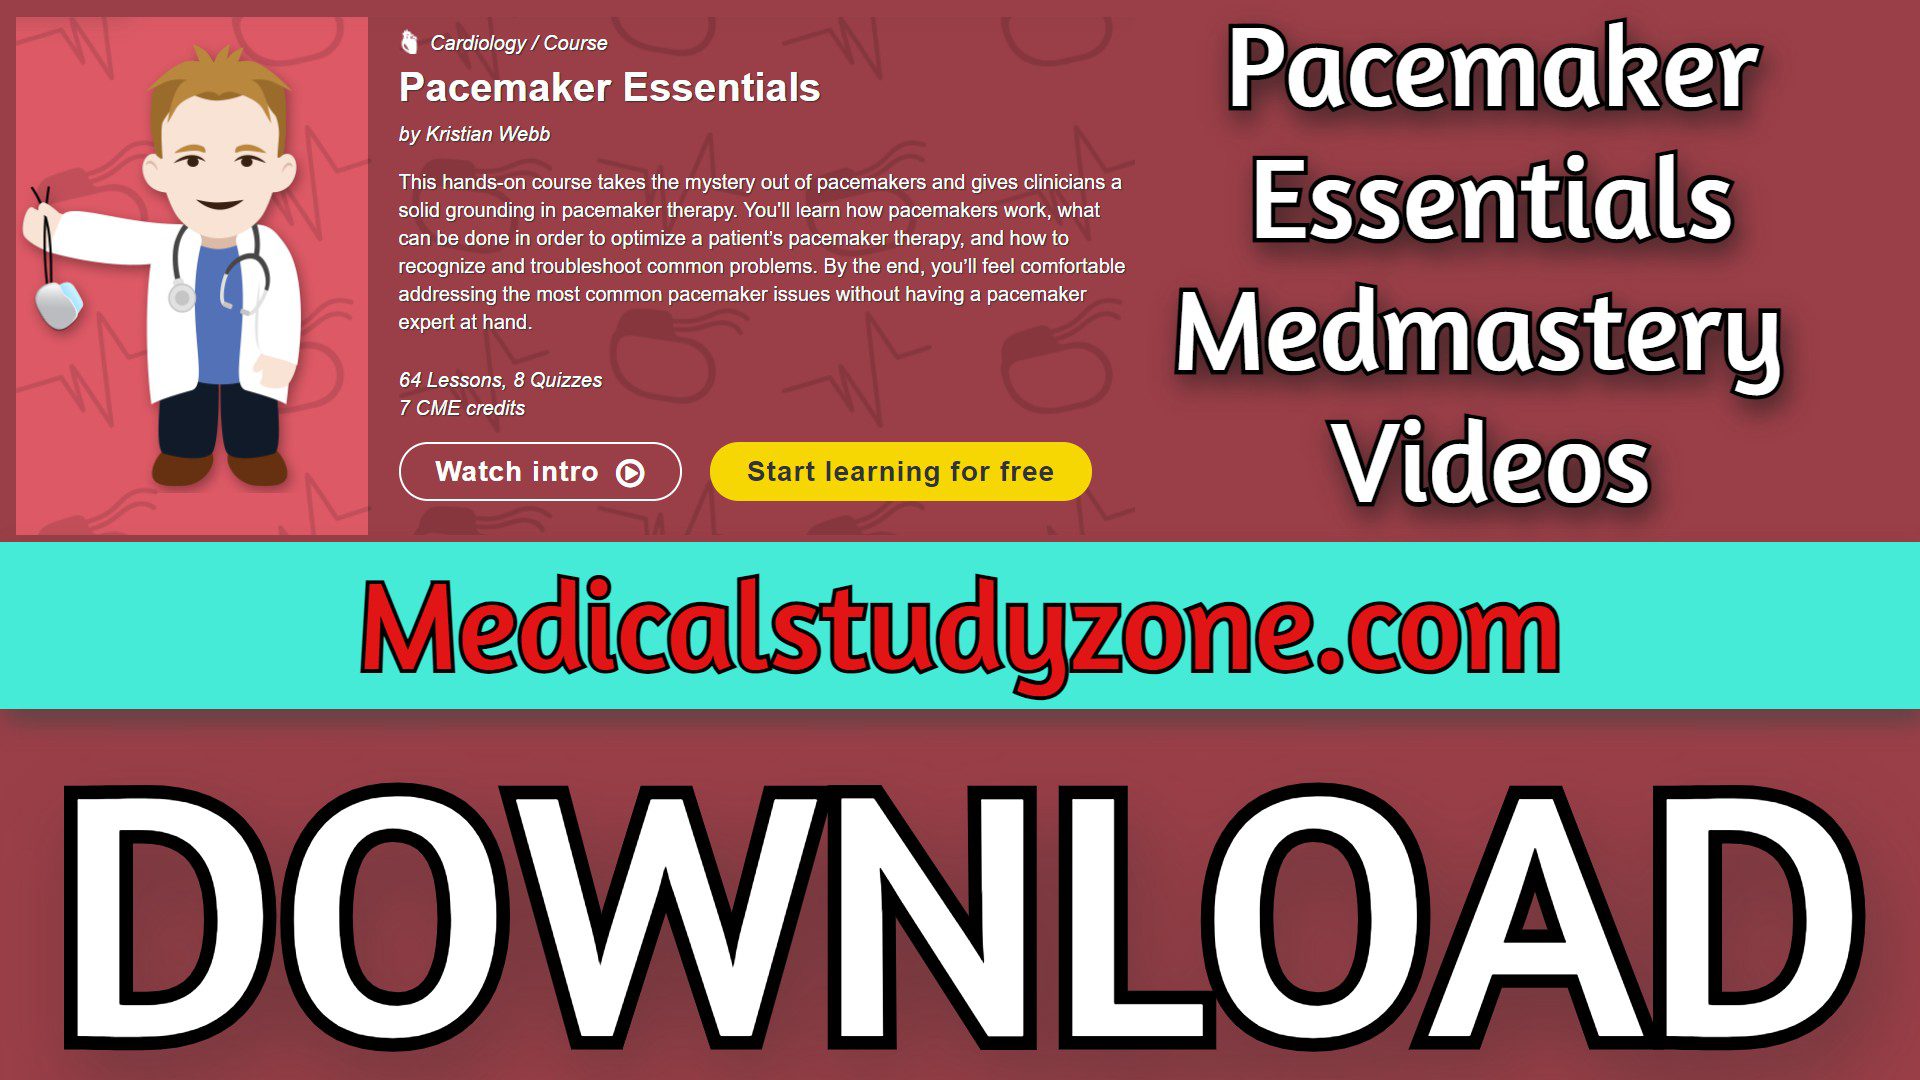 Pacemaker Essentials | Medmastery 2023 Videos Free Download